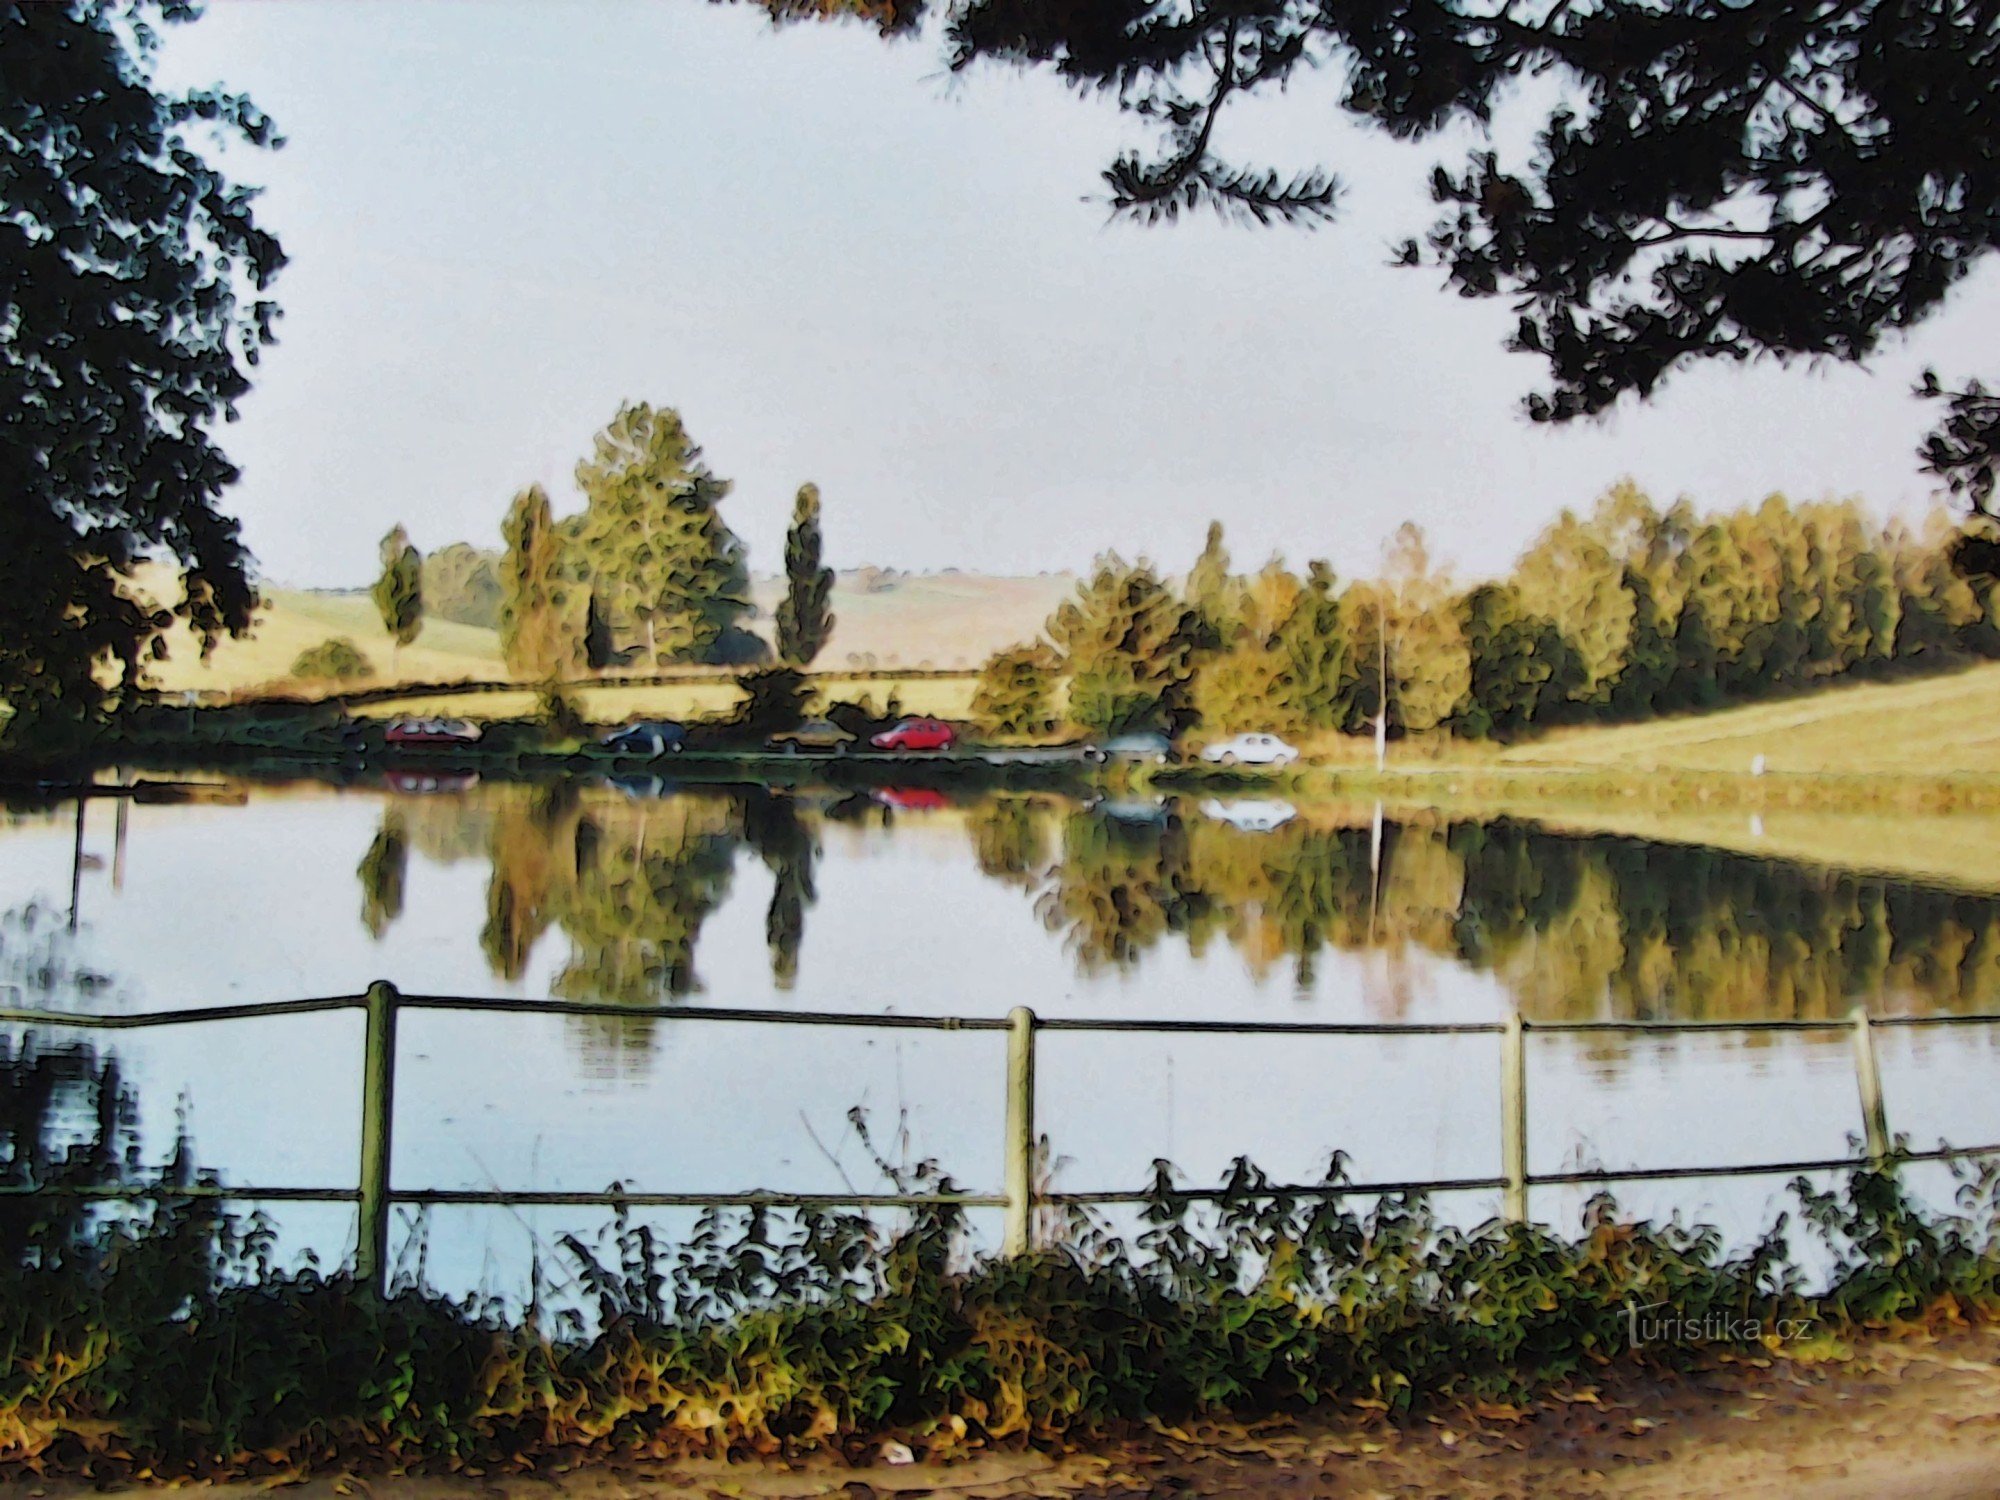 În zori în Lačnovsko - retro 2002